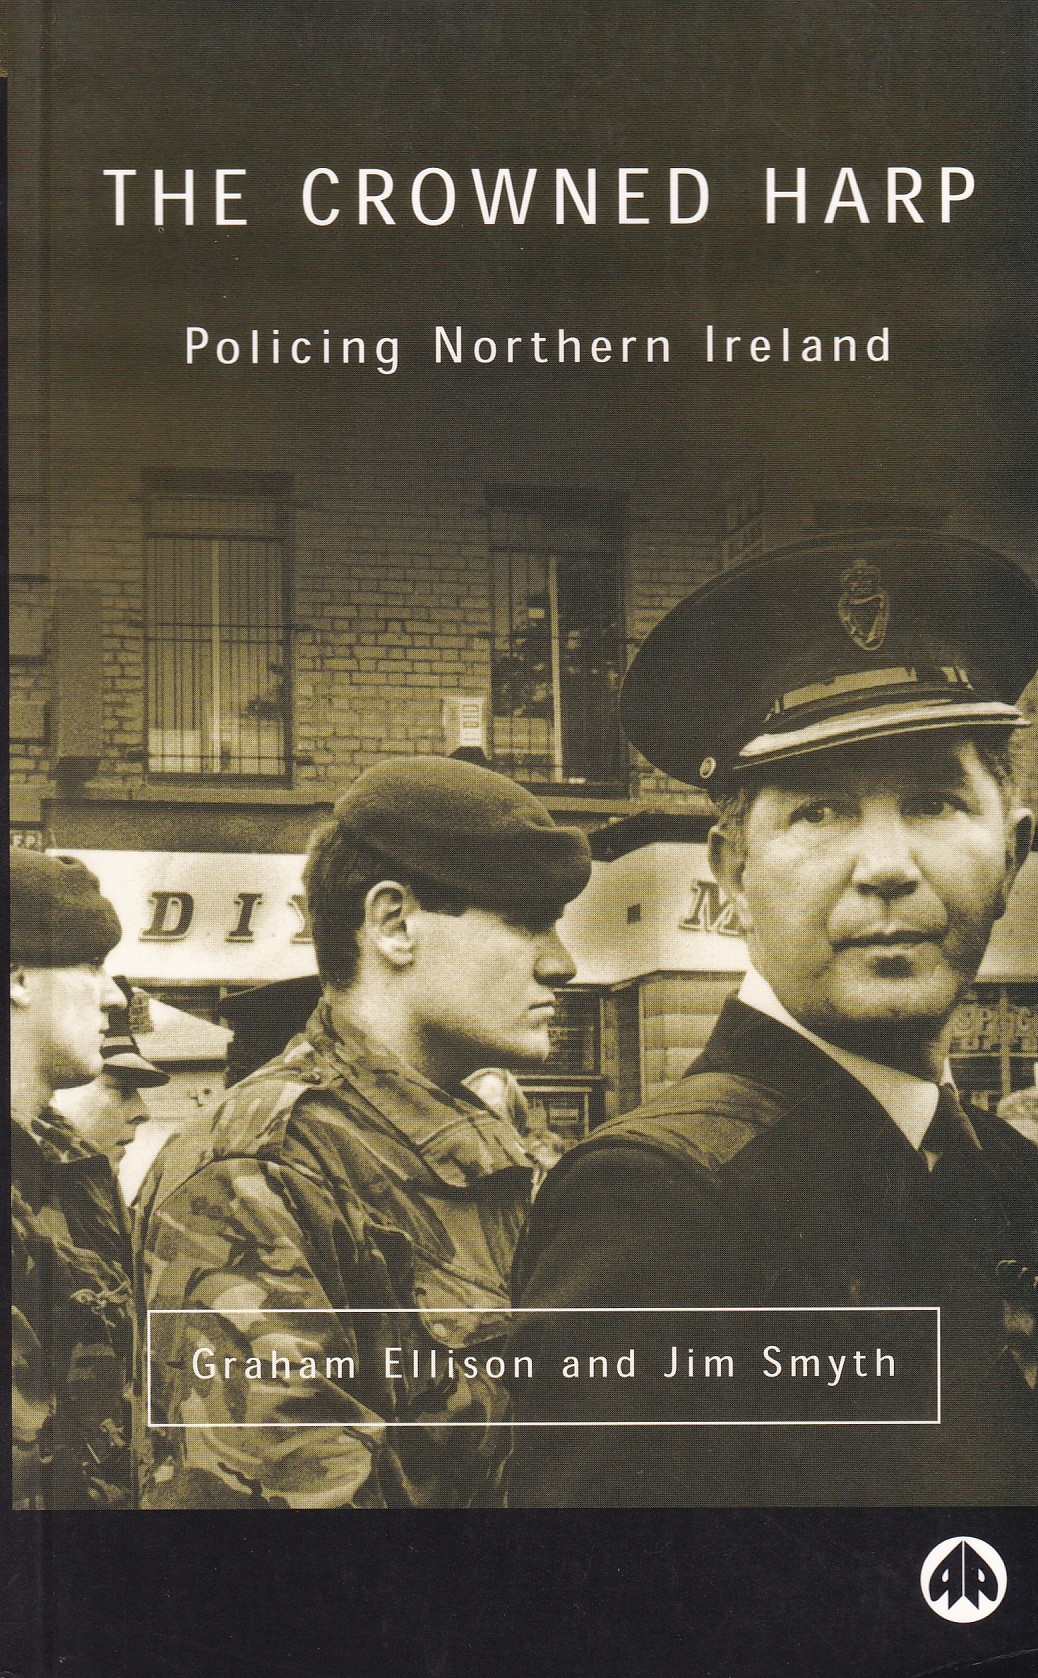 The Crowned Harp: Policing Northern Ireland by Graham Ellison & Jim Smyth